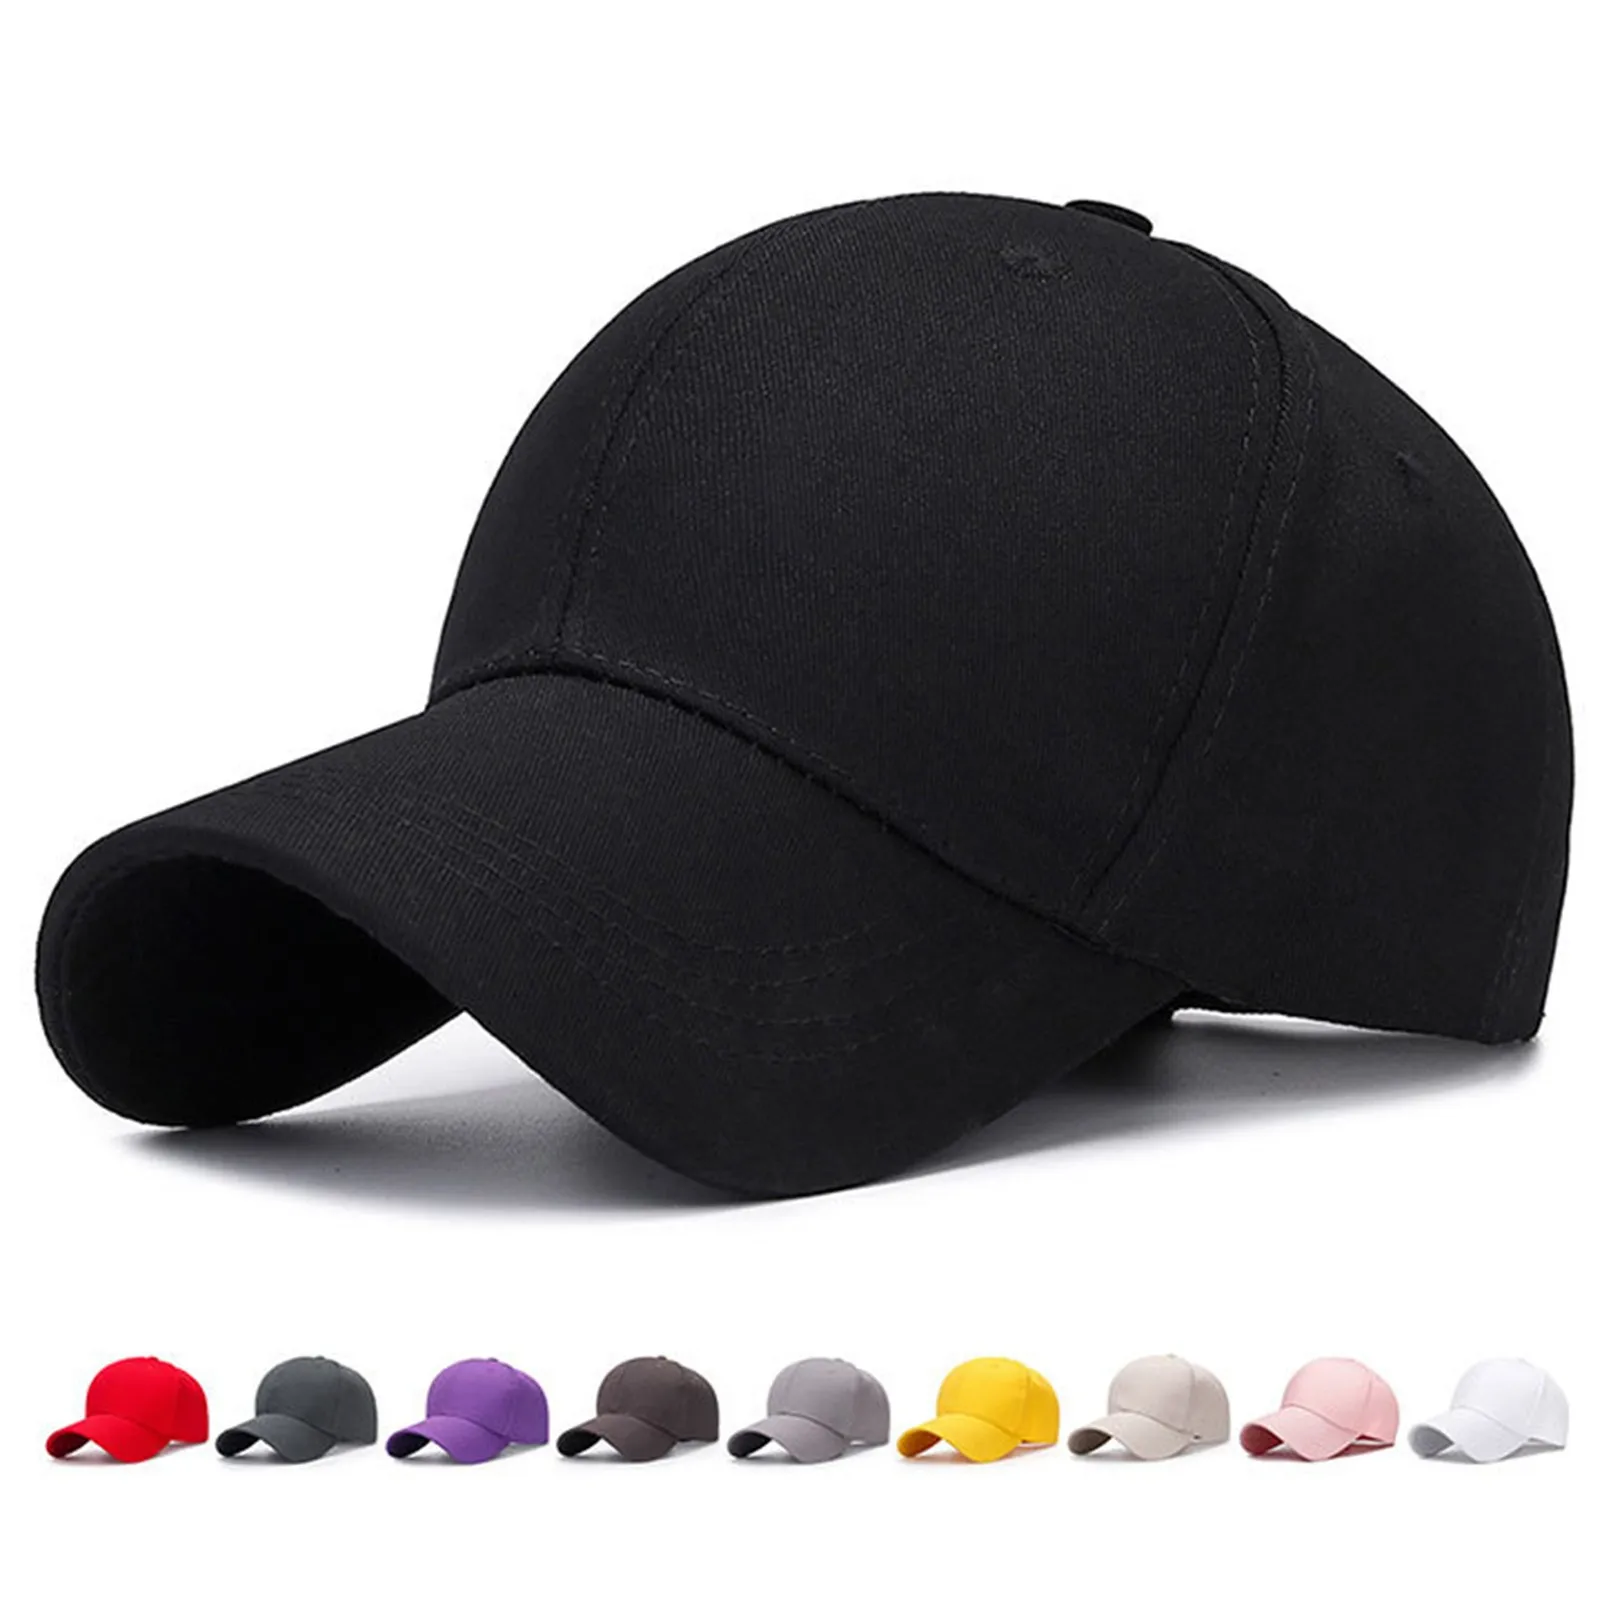 

Fashion Women Men Adjustable Colorblock Baseball Cap Hat Cap Shade Outdoors Cool Caps For Men And Ladies Gorras Para Hombres